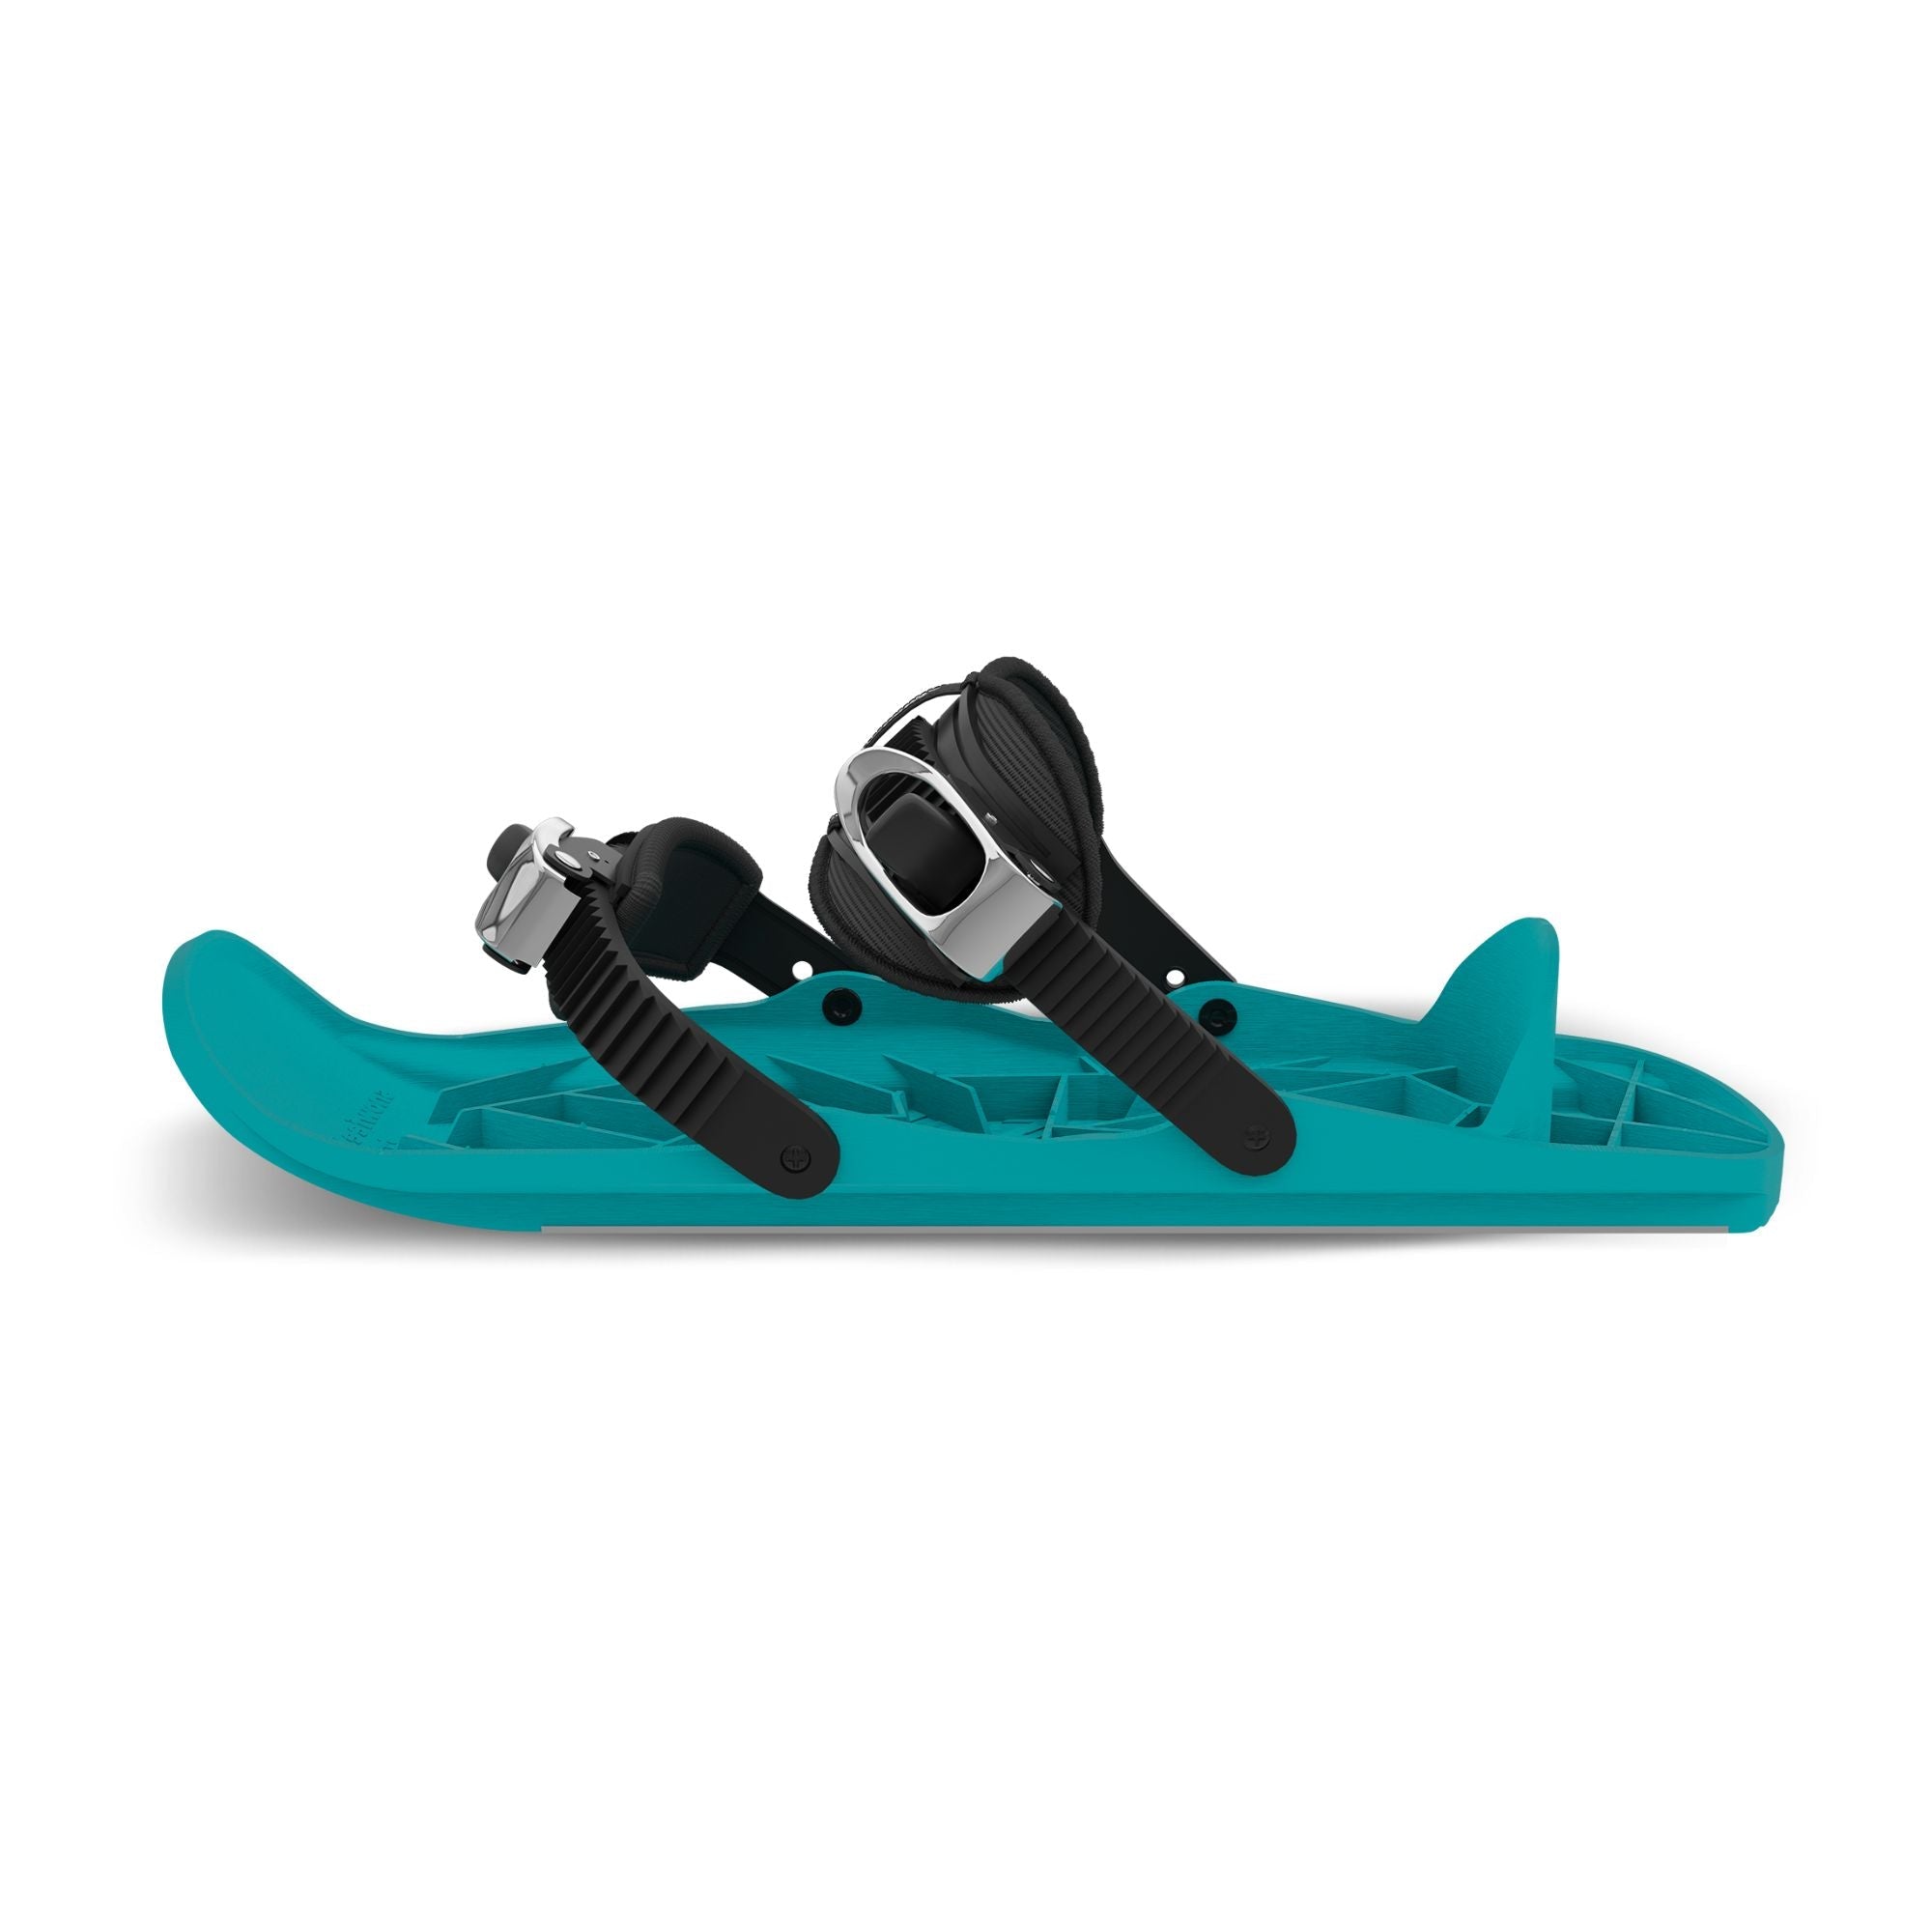 Snowfeet* MINI KIDS | Shoe Size < 6 US | Mini Ski Skates - snowfeet*